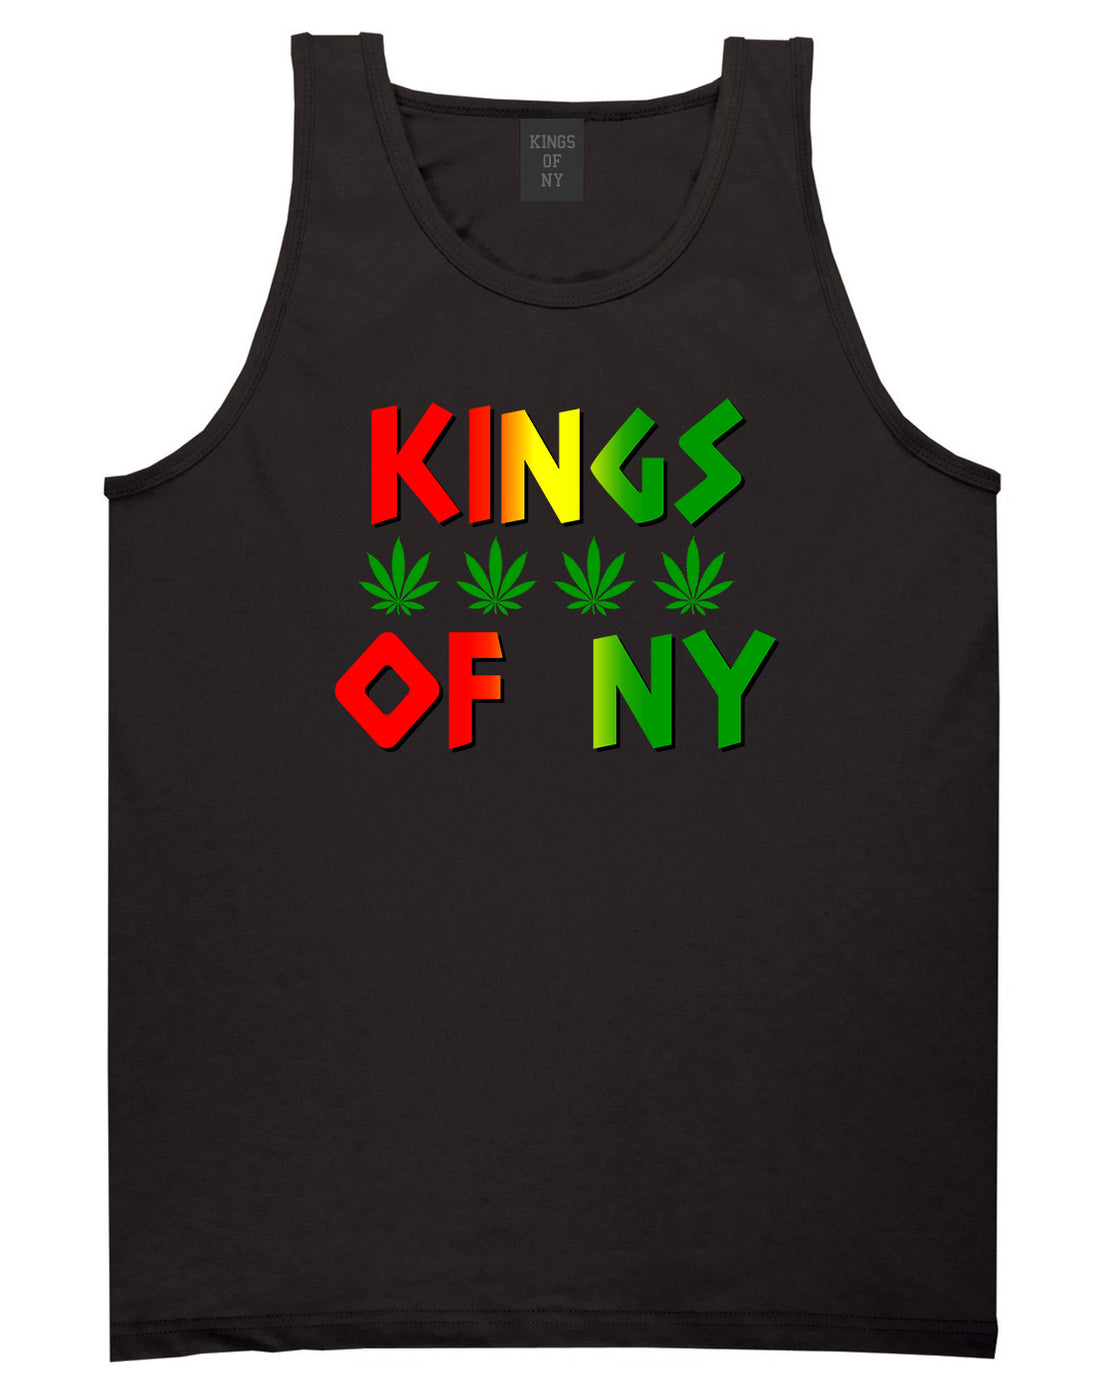 Puff Puff Pass Mens Tank Top Shirt Black by Kings Of NY